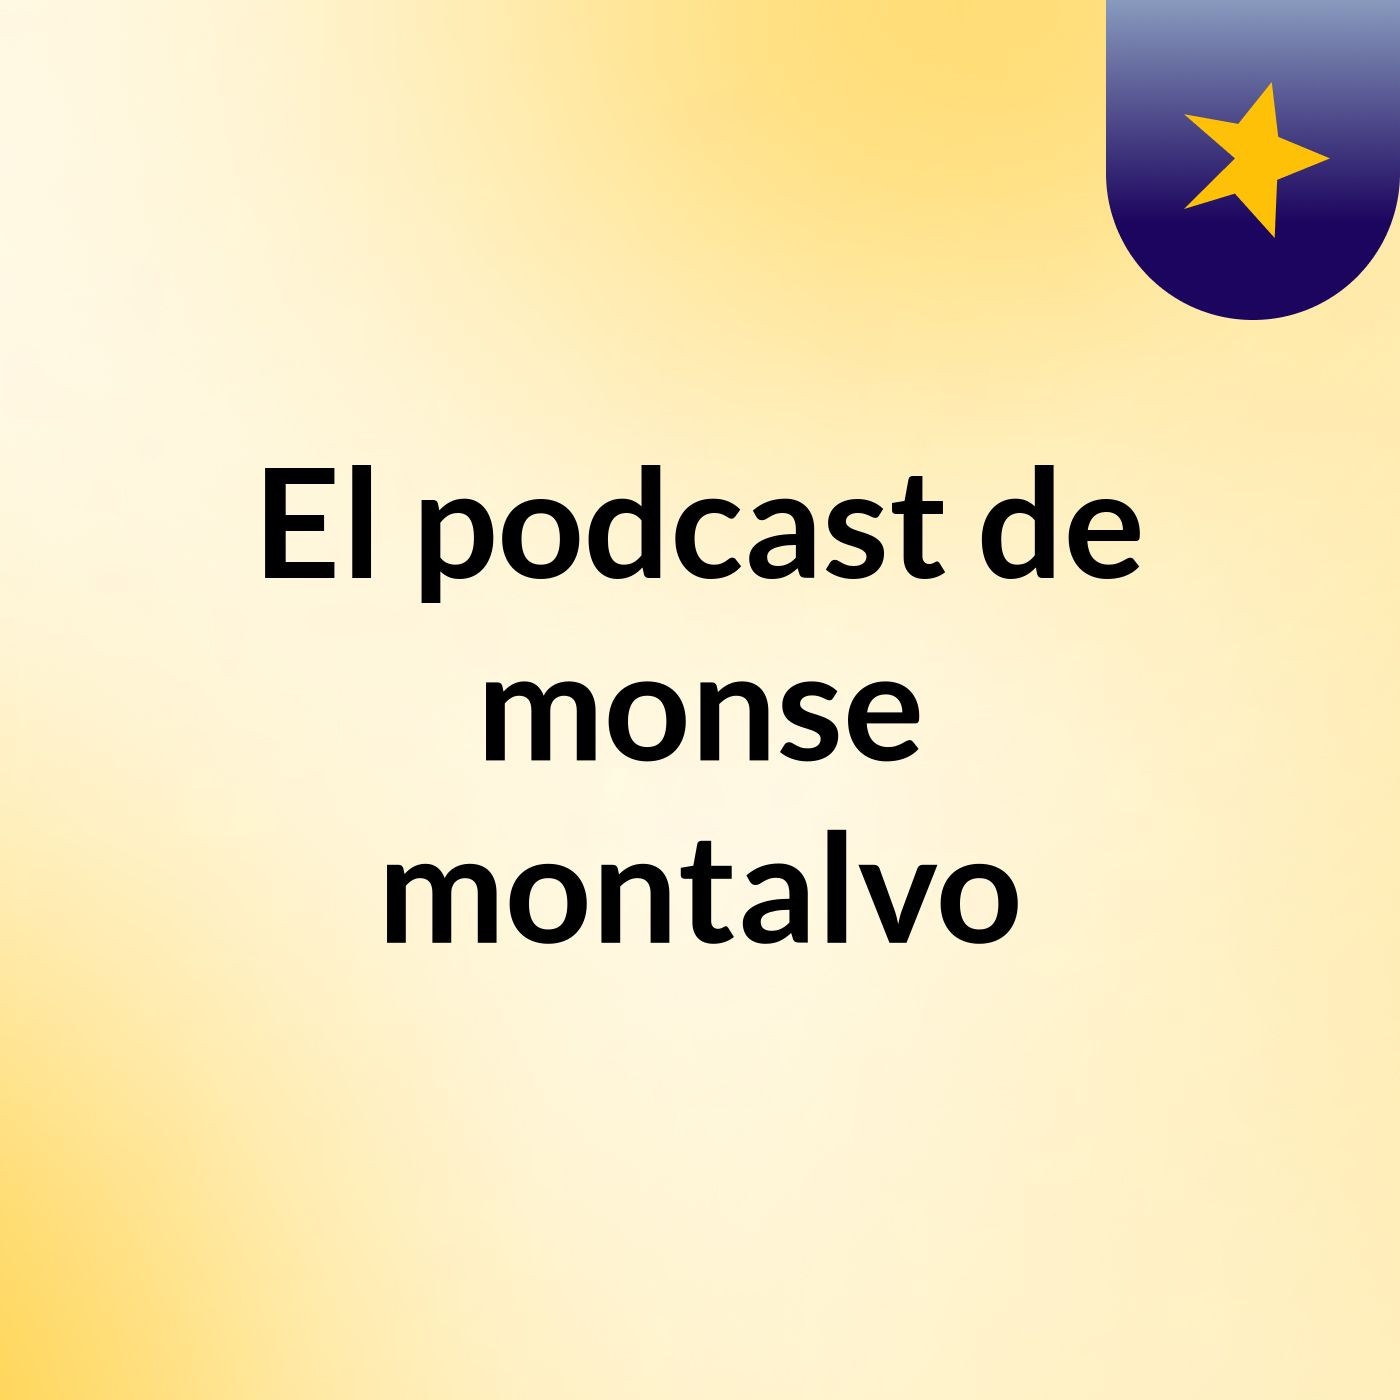 El podcast de monse montalvo